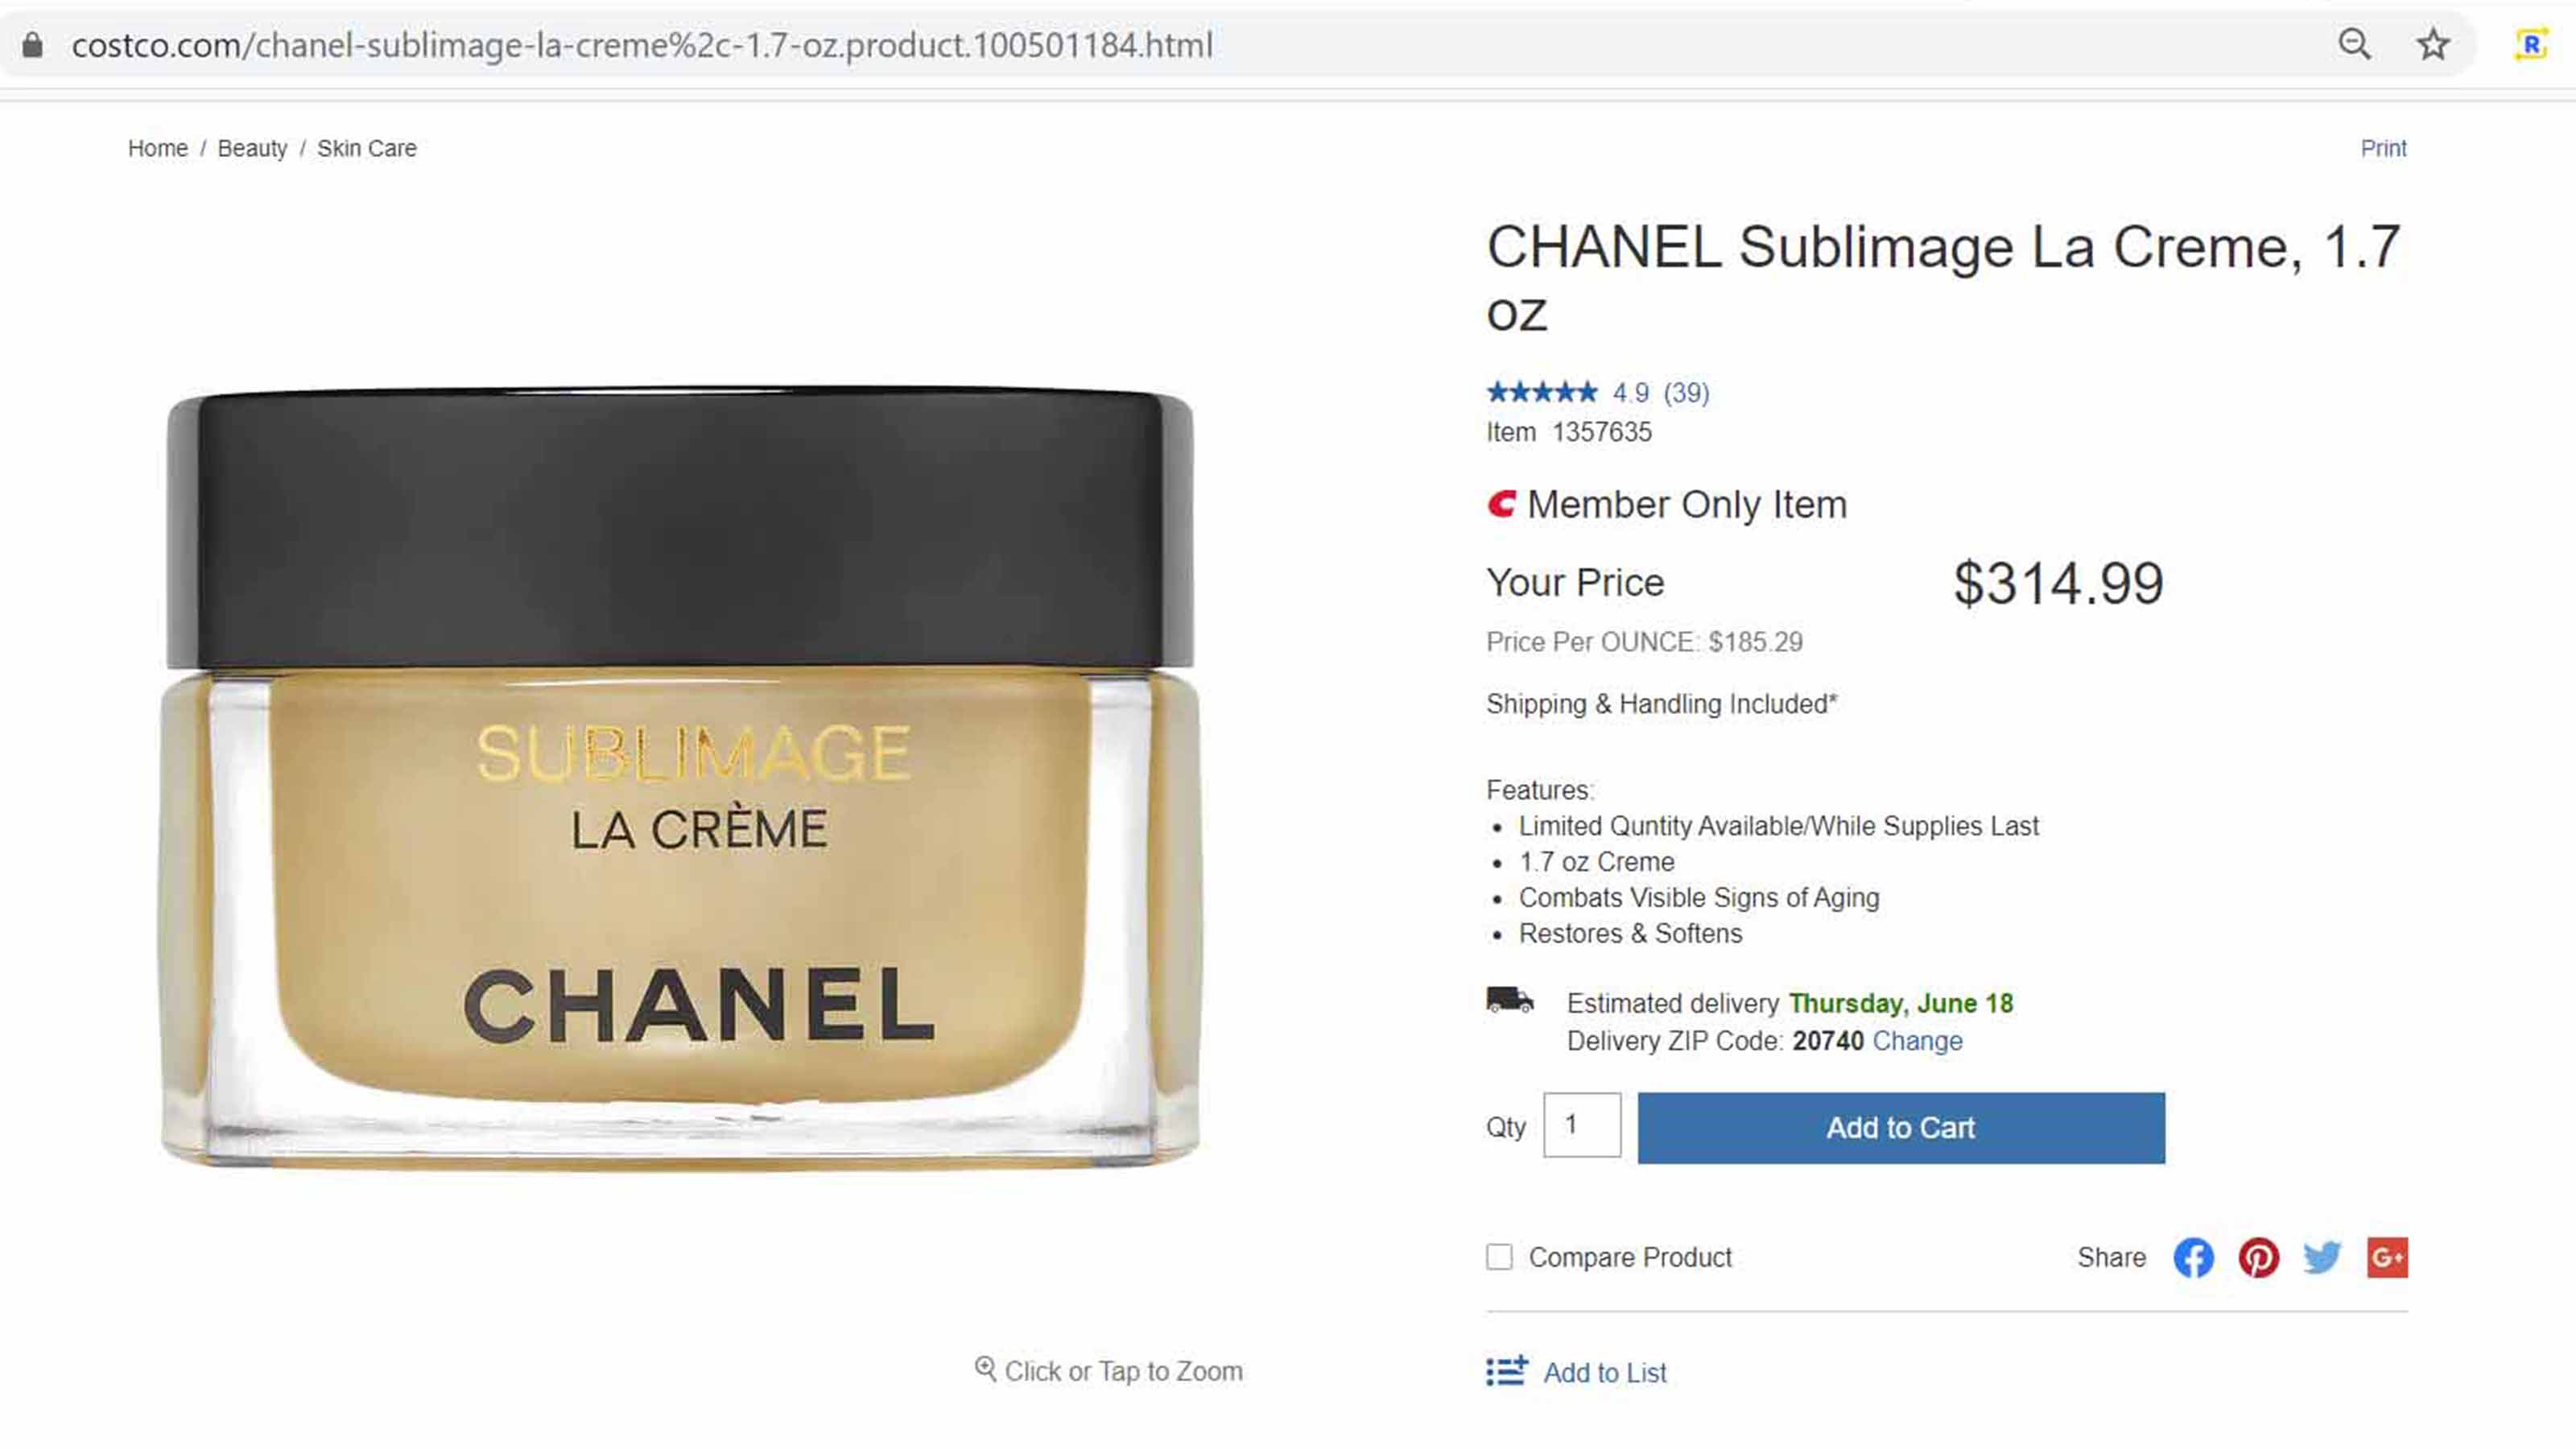 Chanel Sublimage La Creme Texture Fine Ultimate Cream